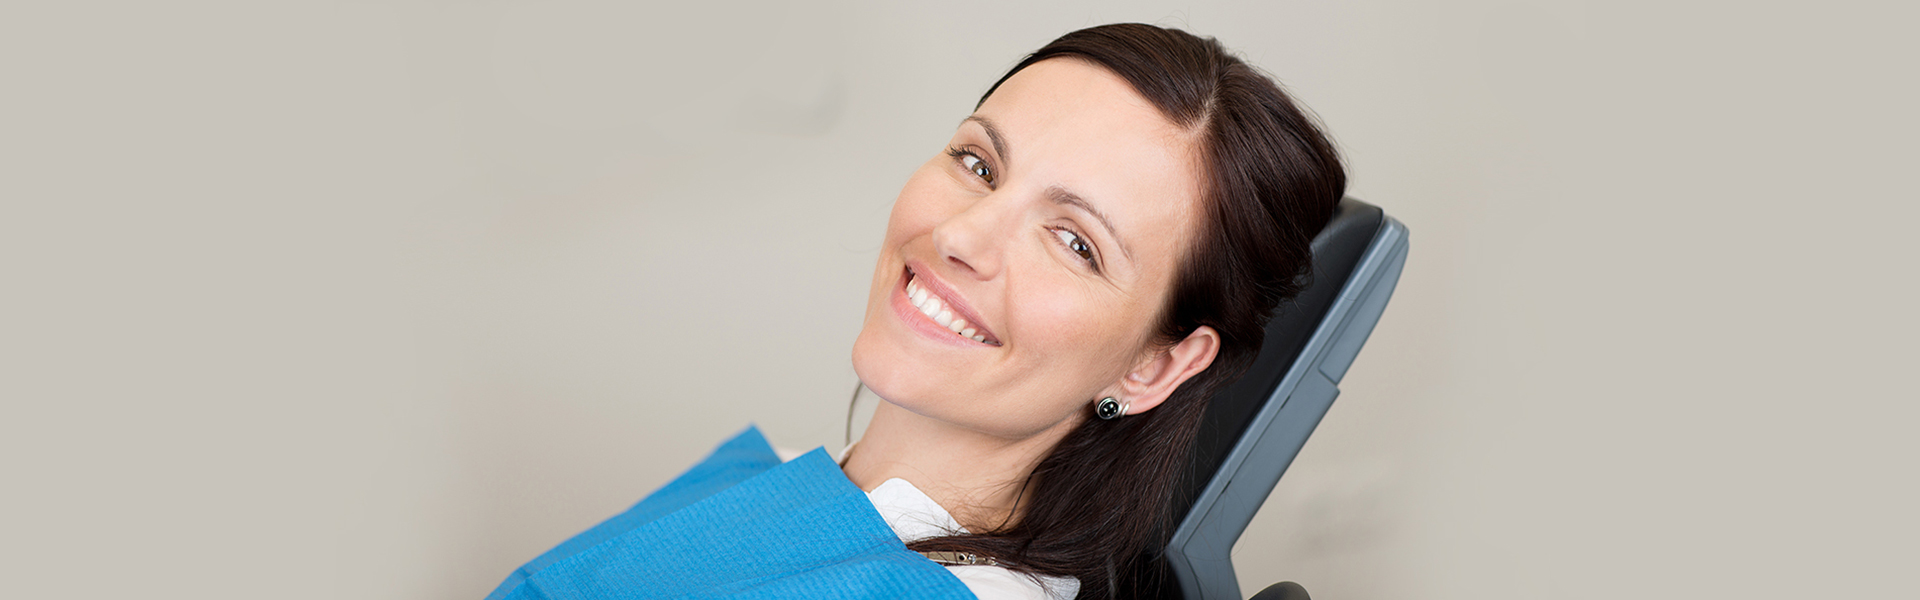 Restorative DentistryProcedures and After-Care Tips